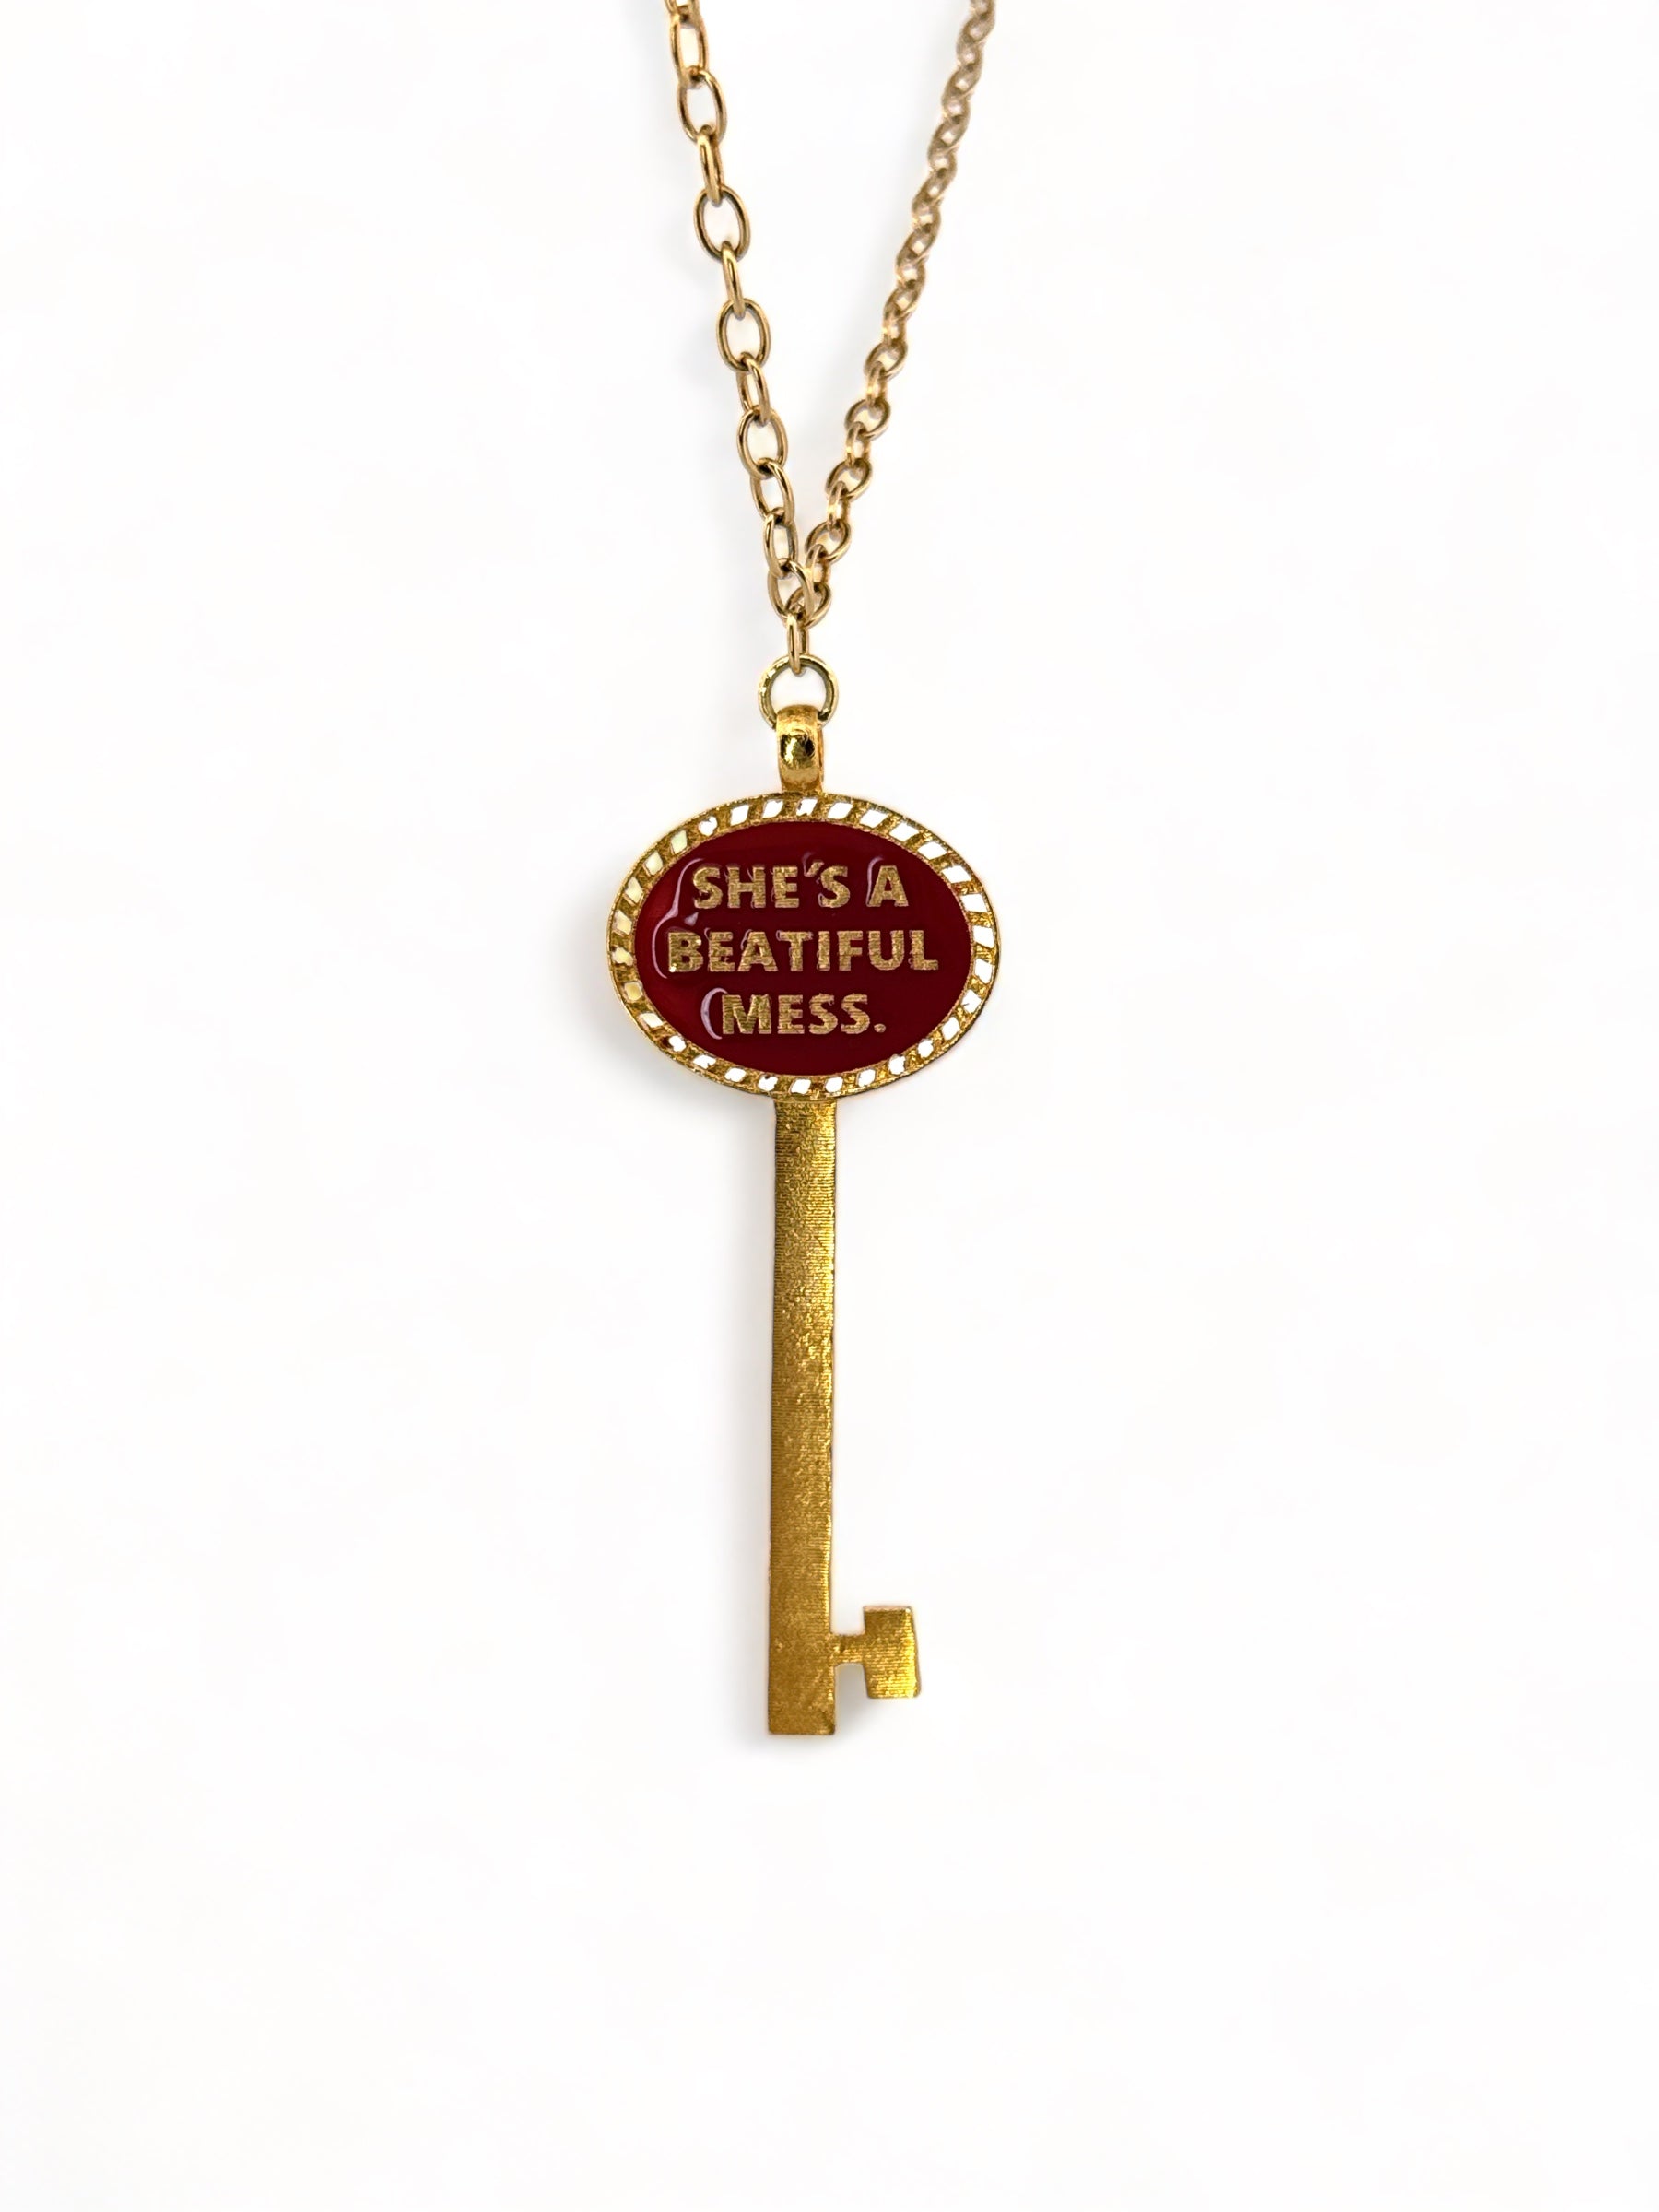 She’s a beautiful mess key necklace pendant keys